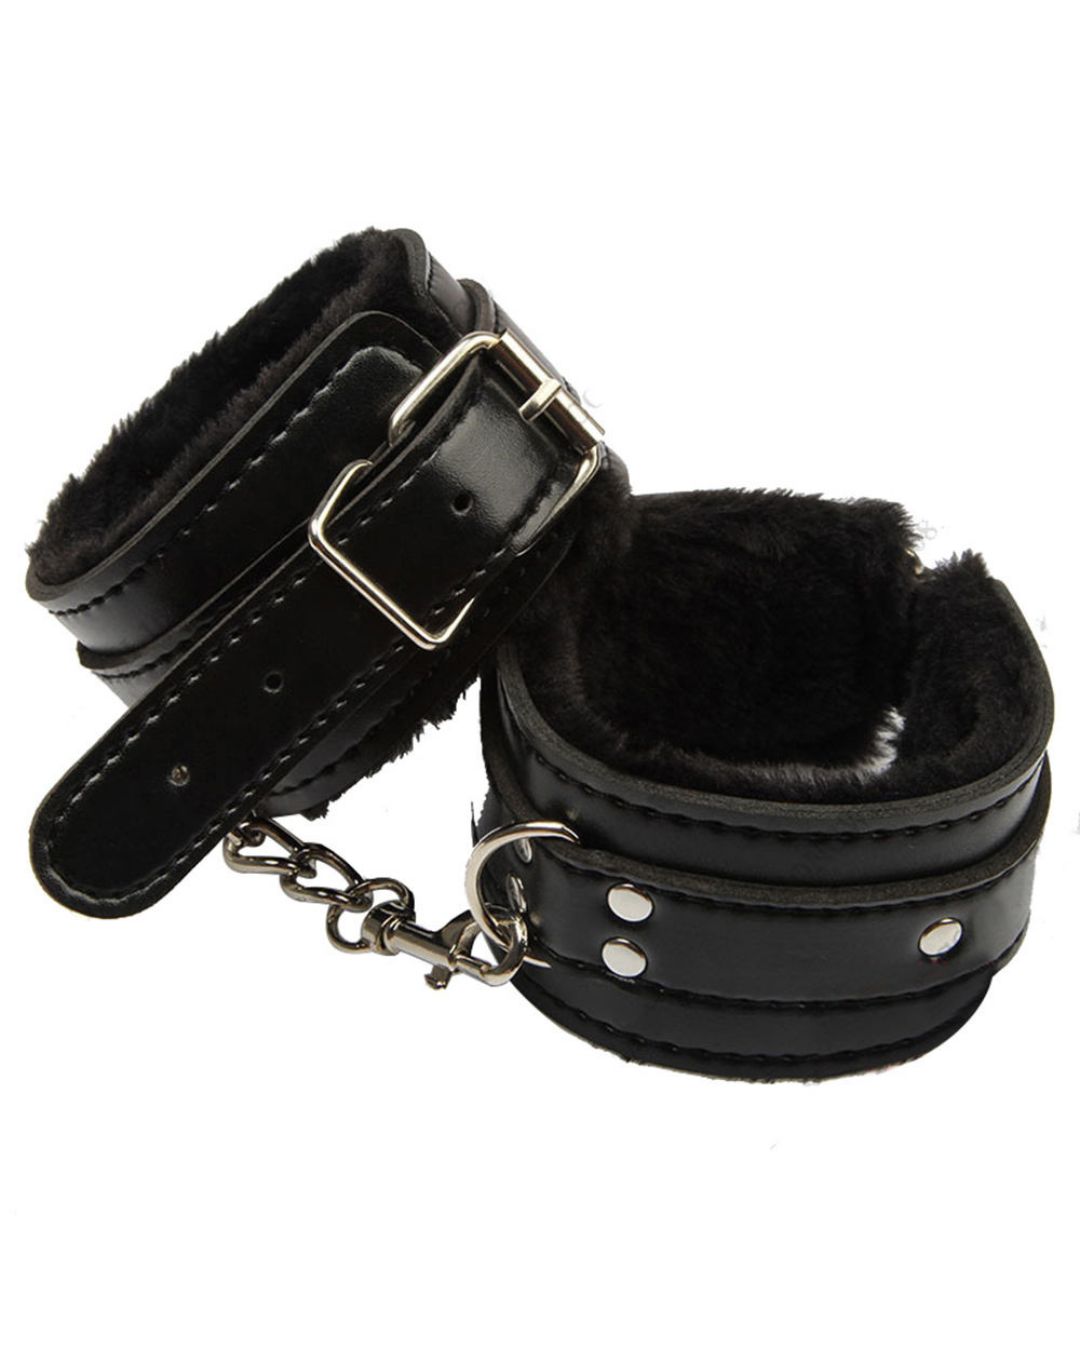 PU Leather Handcuffs